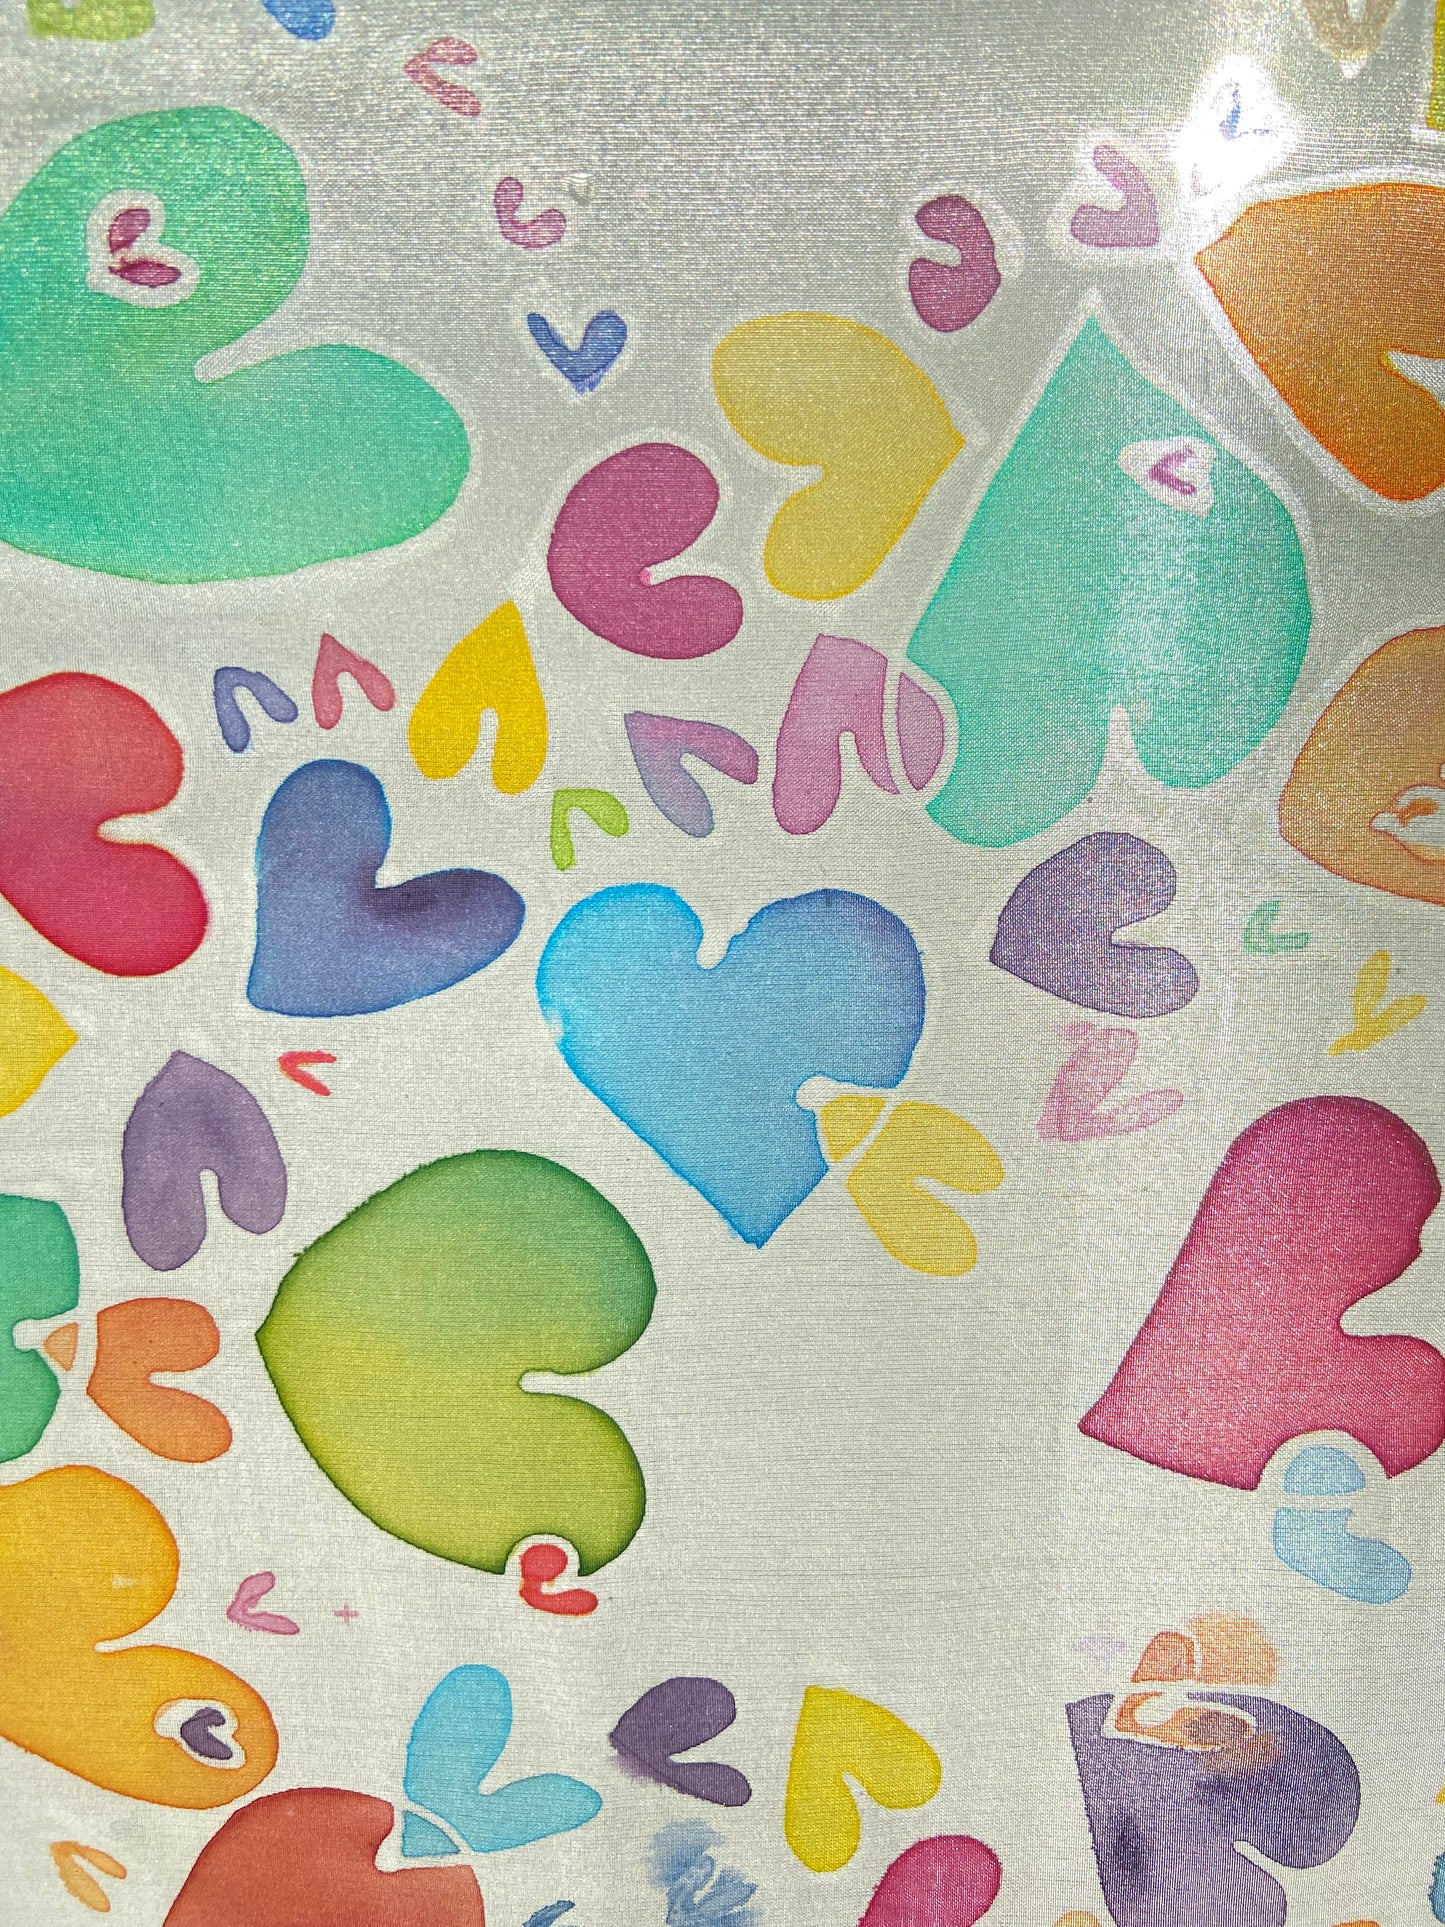 Hand-painted Hearts on silk - art piece, scarf, hair tie